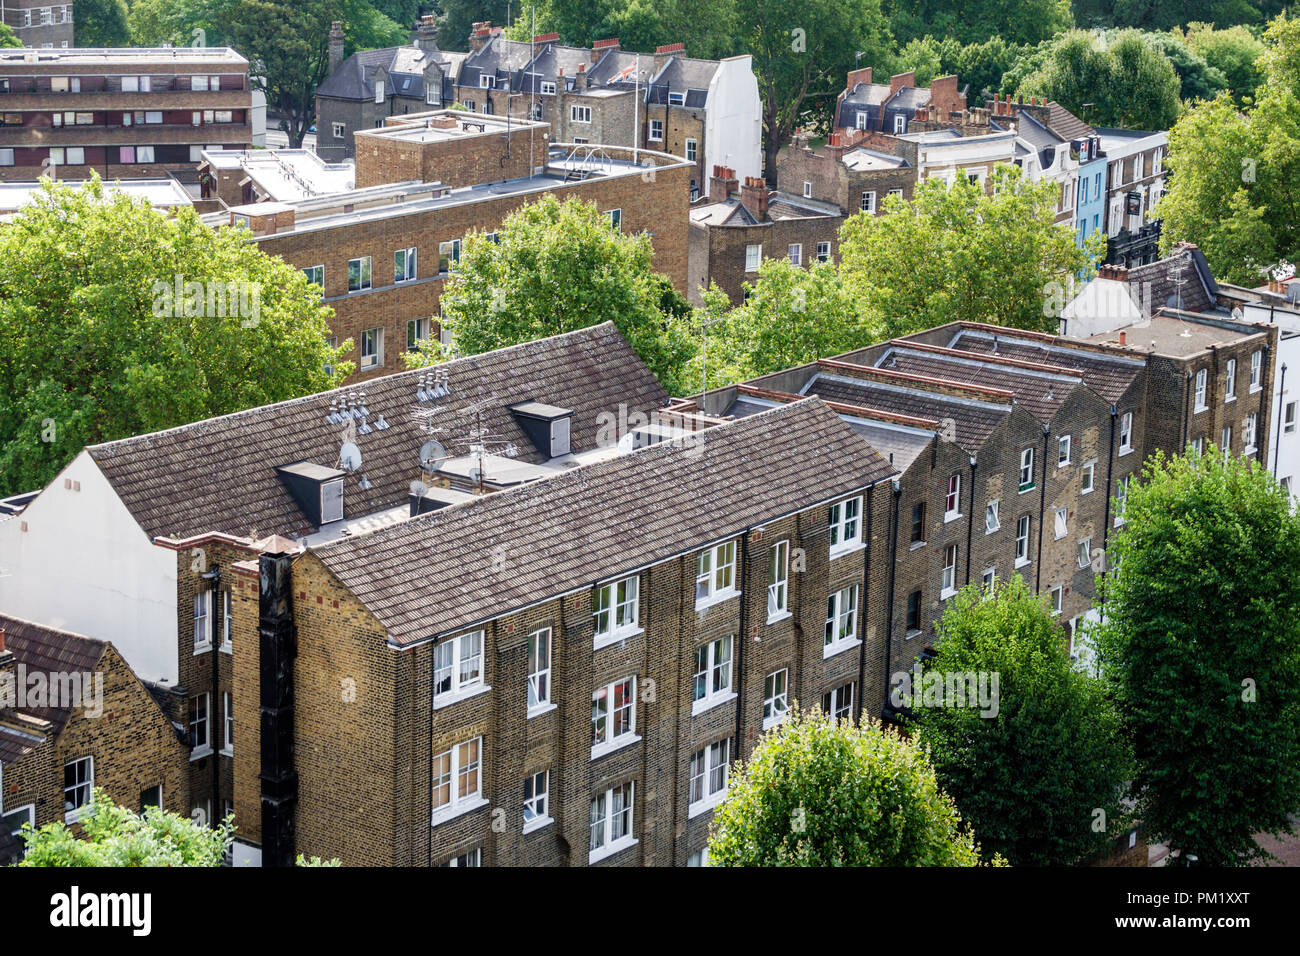 London England,UK,South Bank,buildings,rooftops,trees,overhead view,UK GB English Europe,UK180815016 Stock Photo